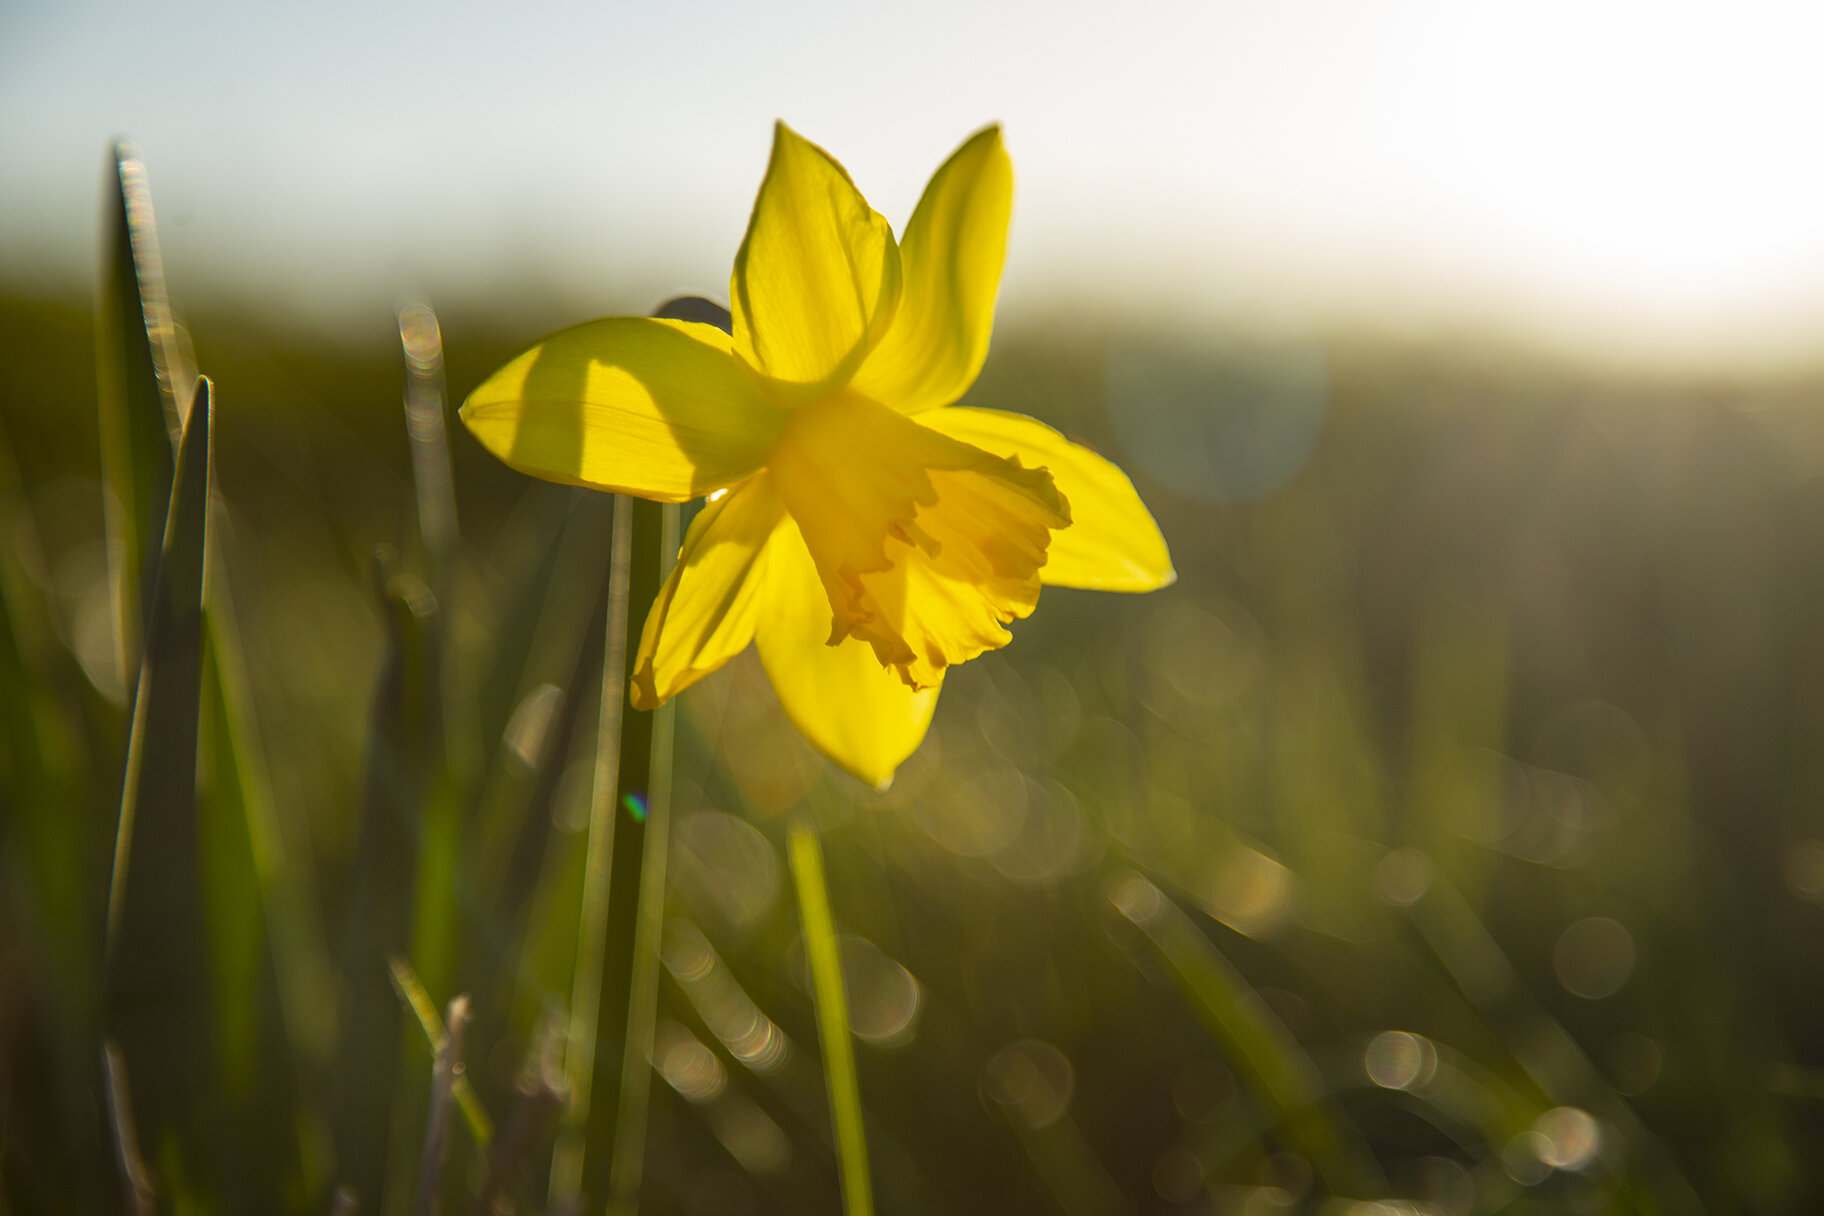  A daffodil in Frederick County, Maryland 